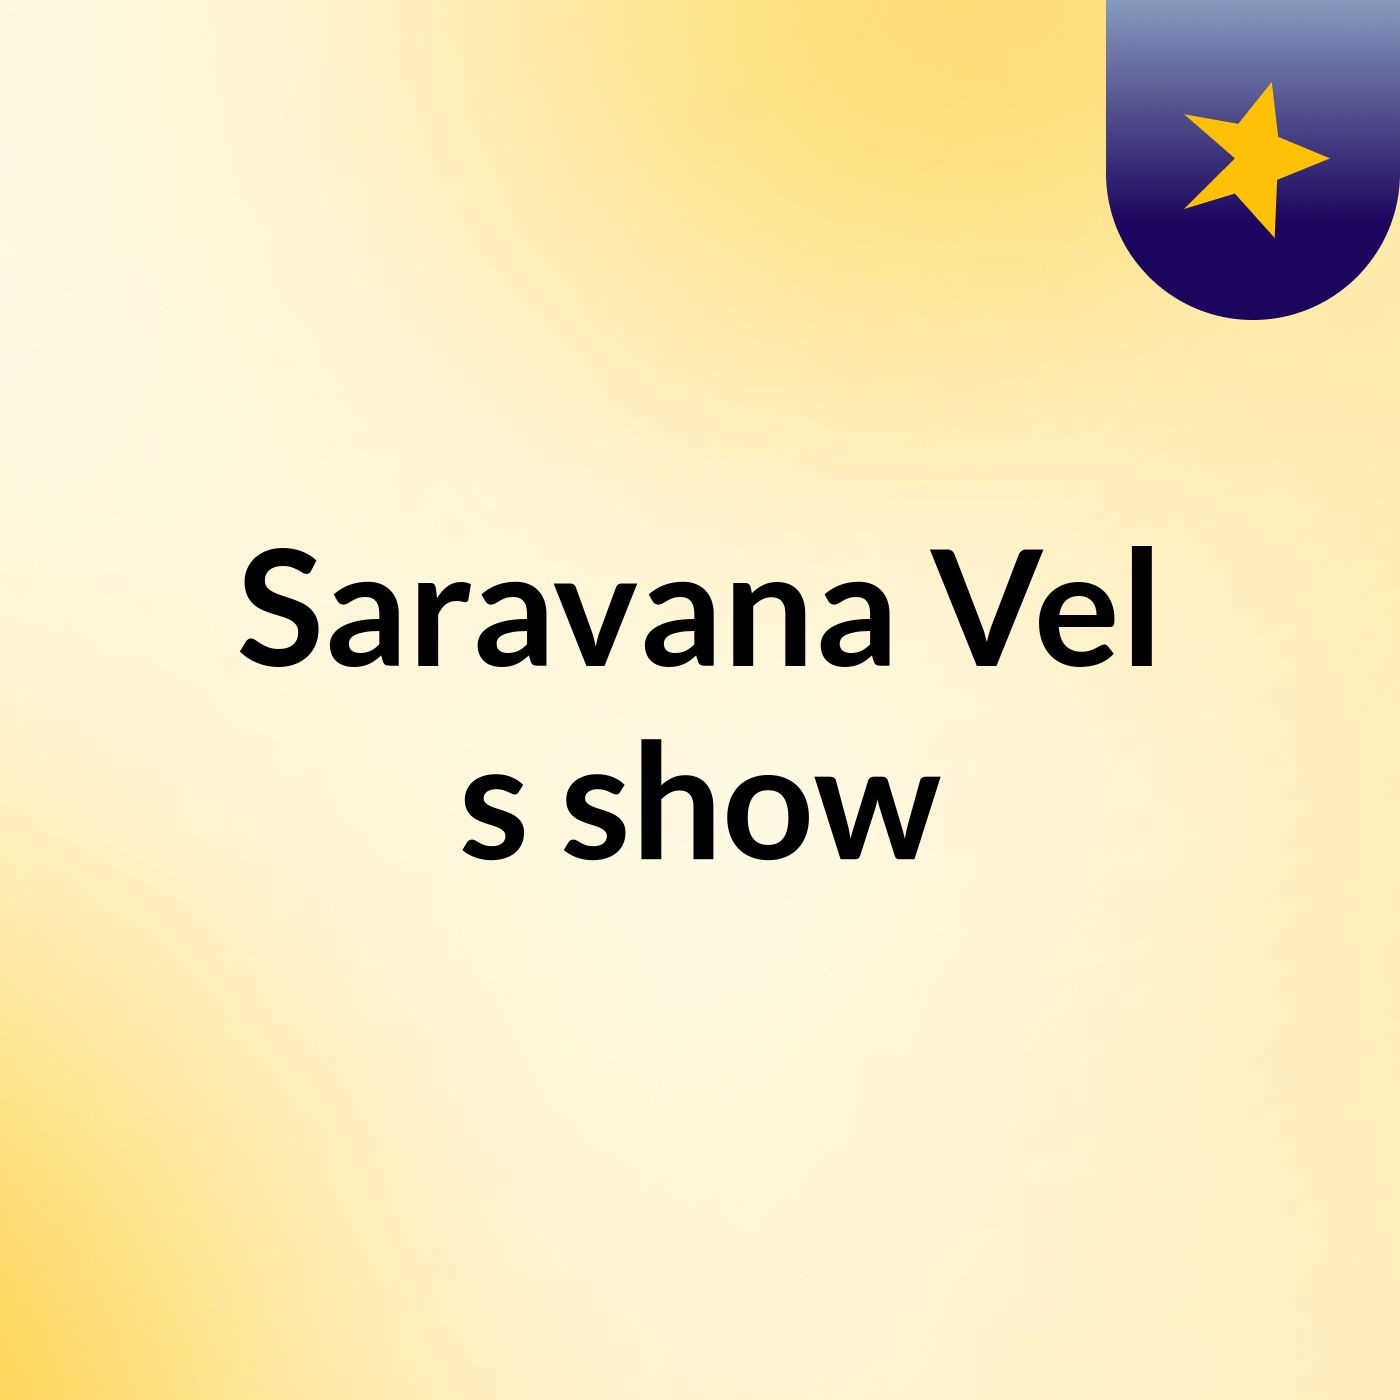 Saravana Vel's show